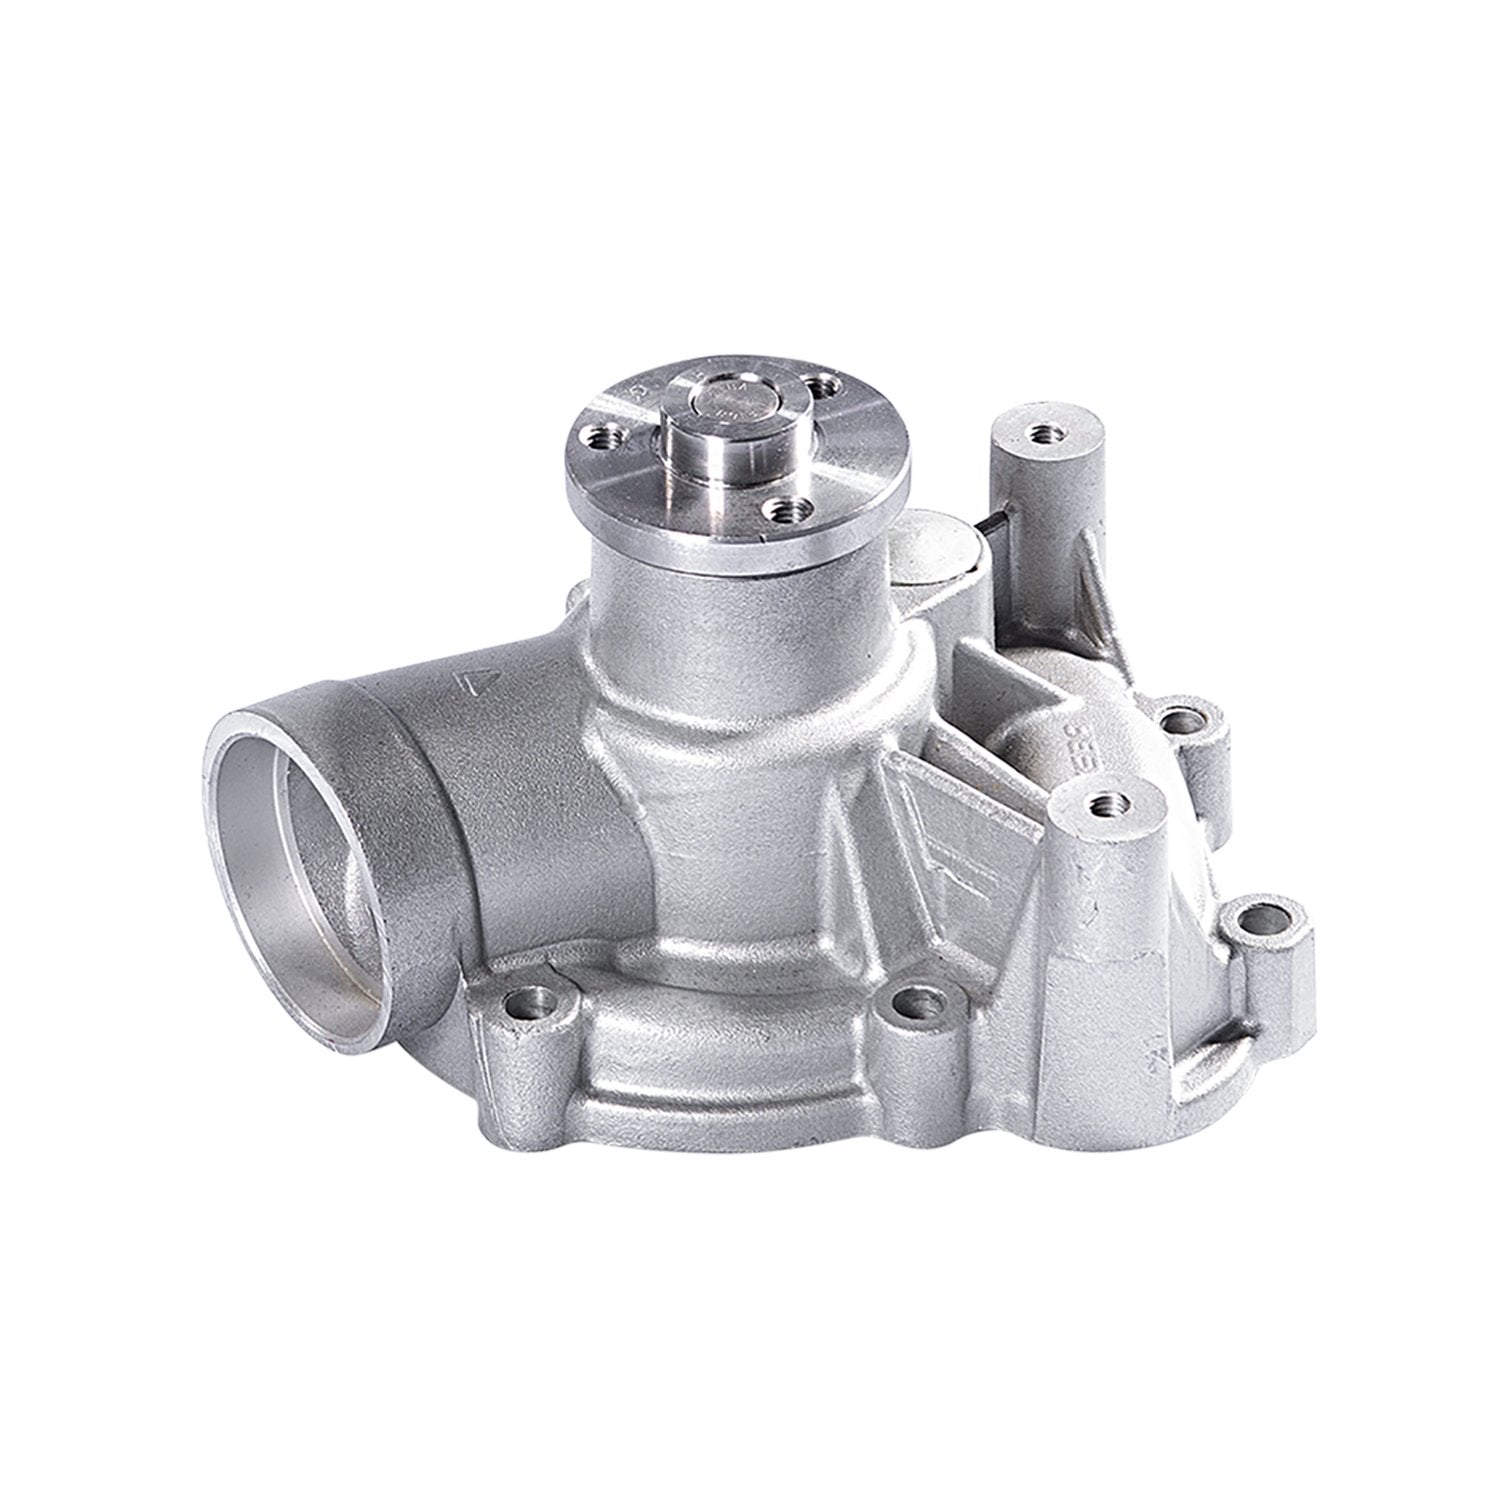 Water Pump Replacement For Deutz Agrotron 04256853 04259547 04801616 04205959